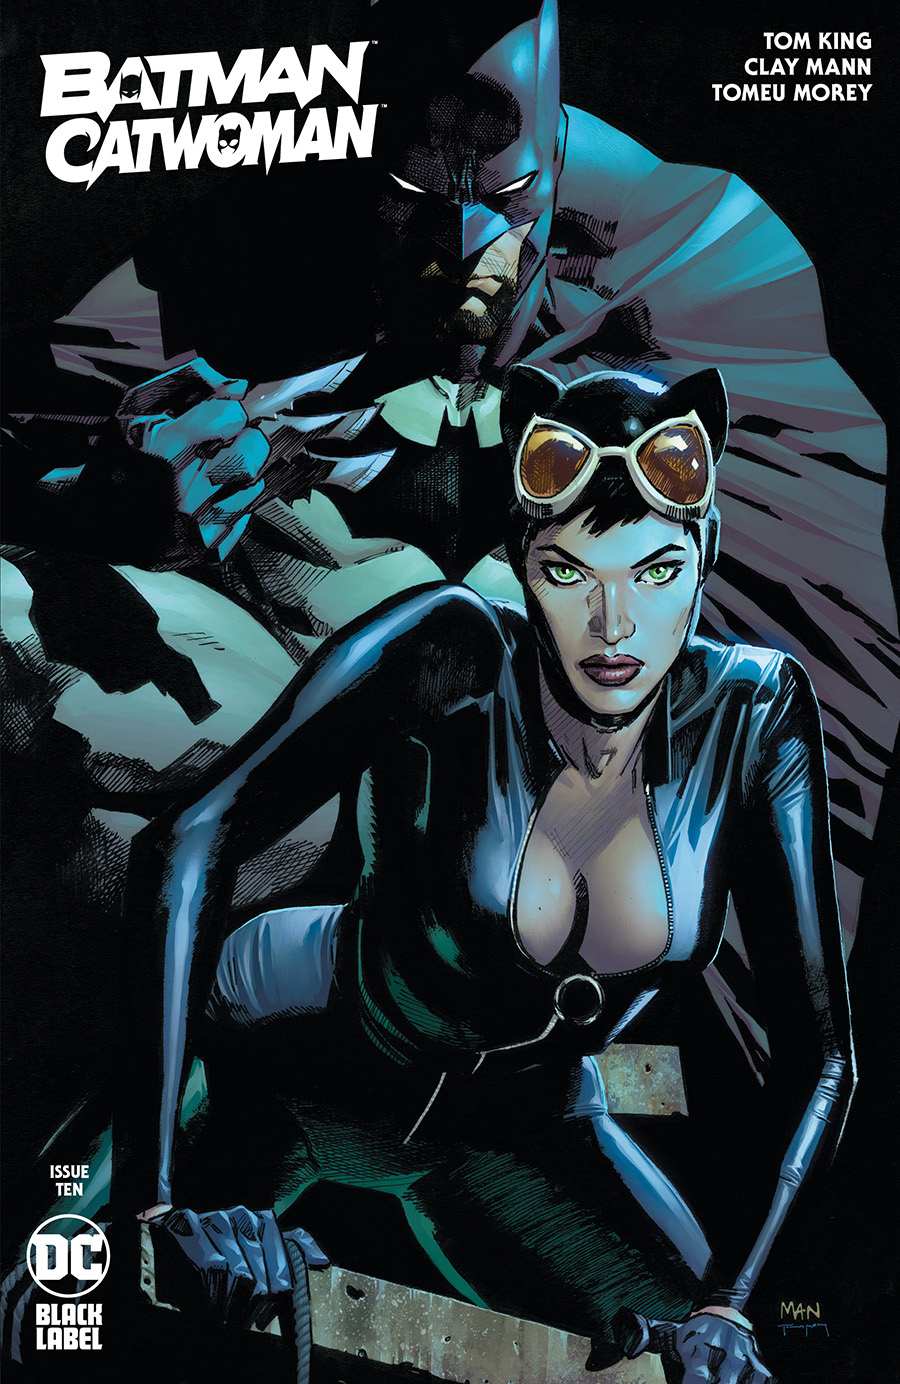 Batman Catwoman #10 Cover A Regular Clay Mann Cover